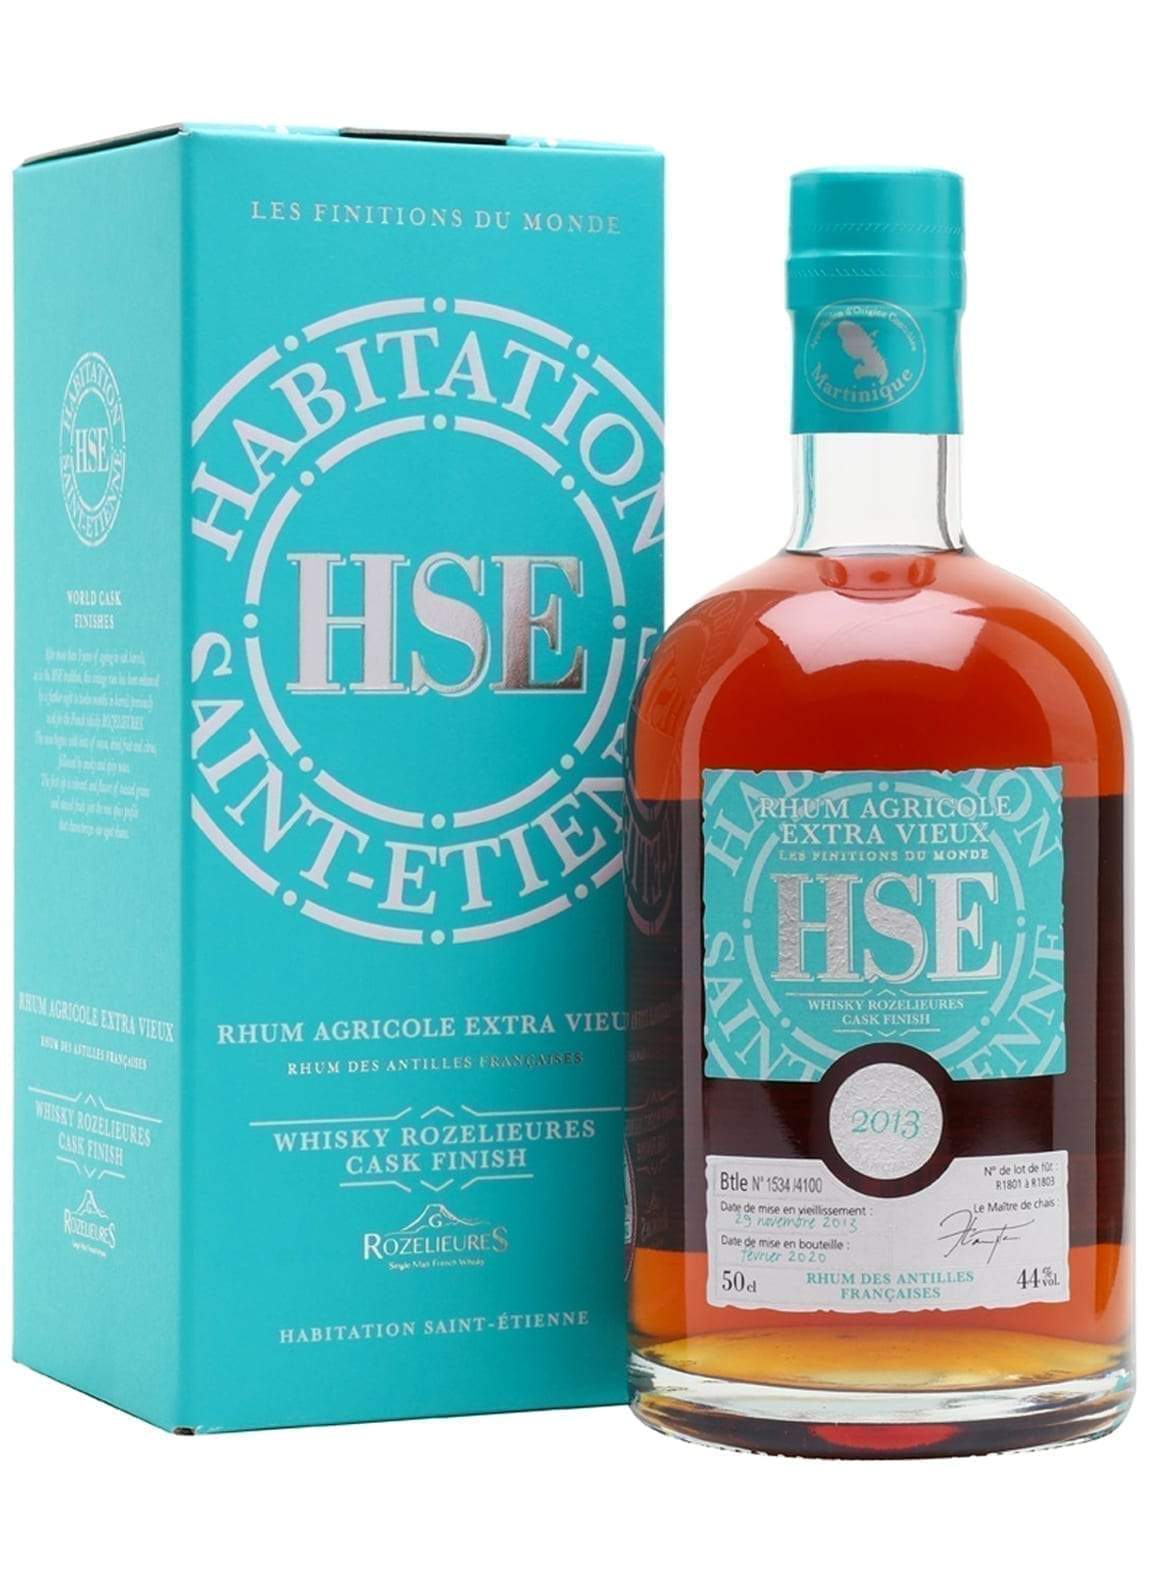 Habitation St Etienne Rum 2013 French whisky casks Roselieures 44% 500ml | Rum | Shop online at Spirits of France